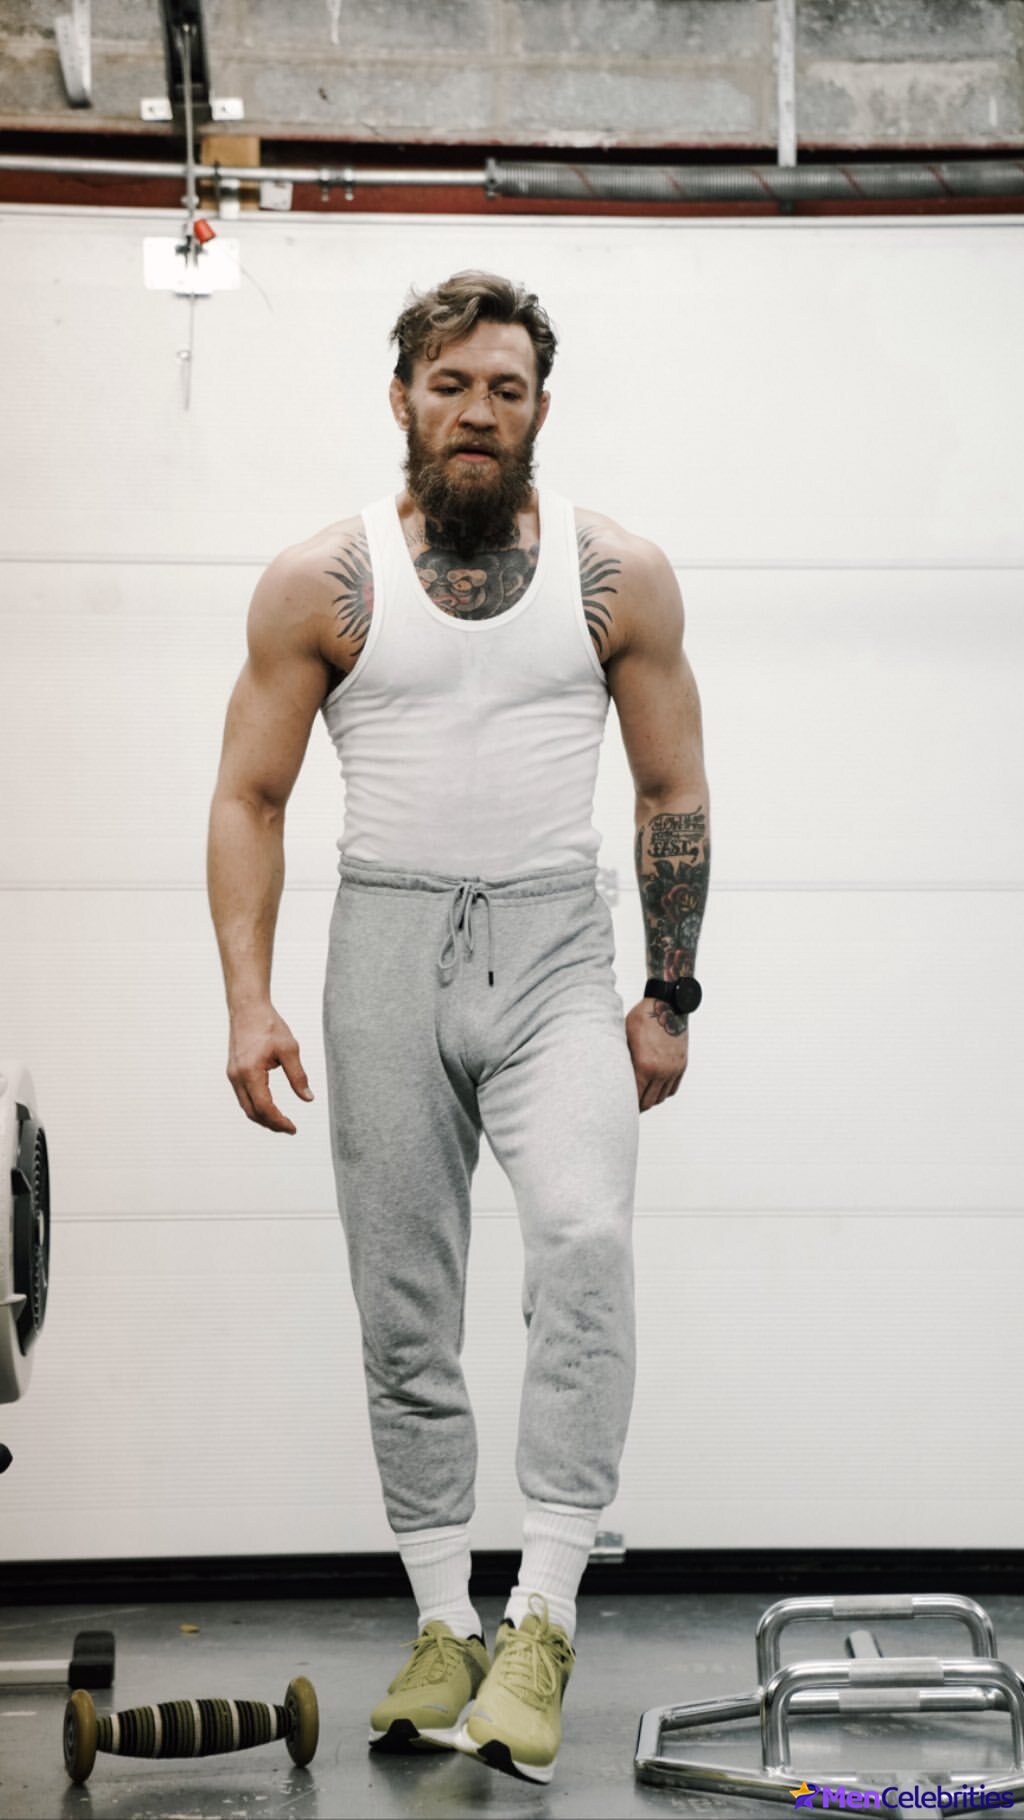 Conor McGregor flaunts his bulge